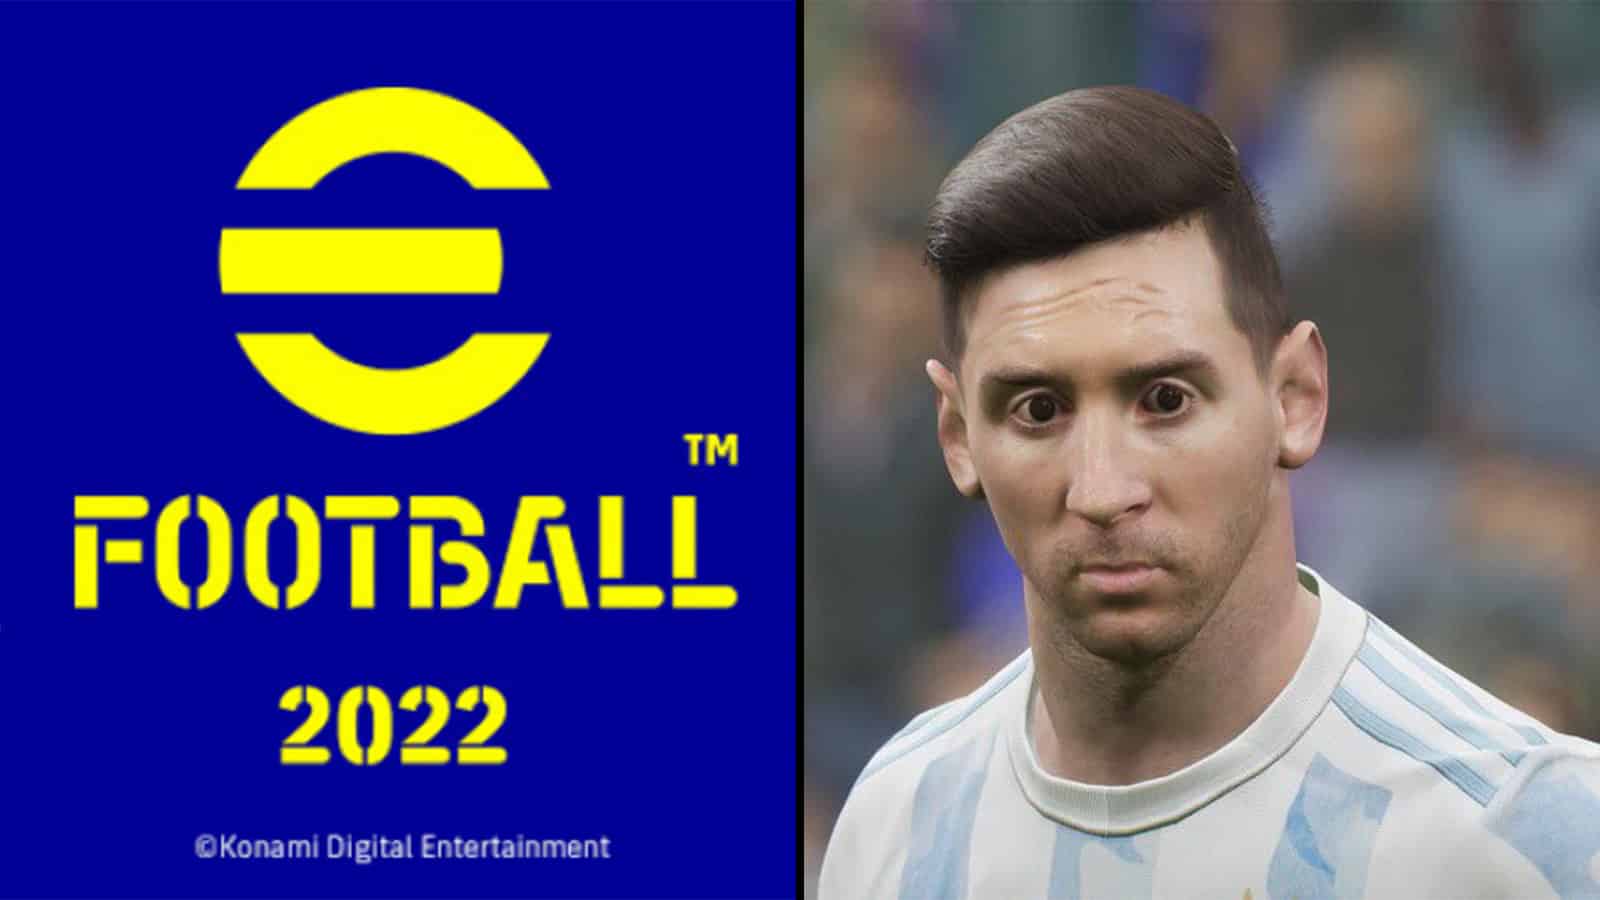 efootball 2922 Messi PES